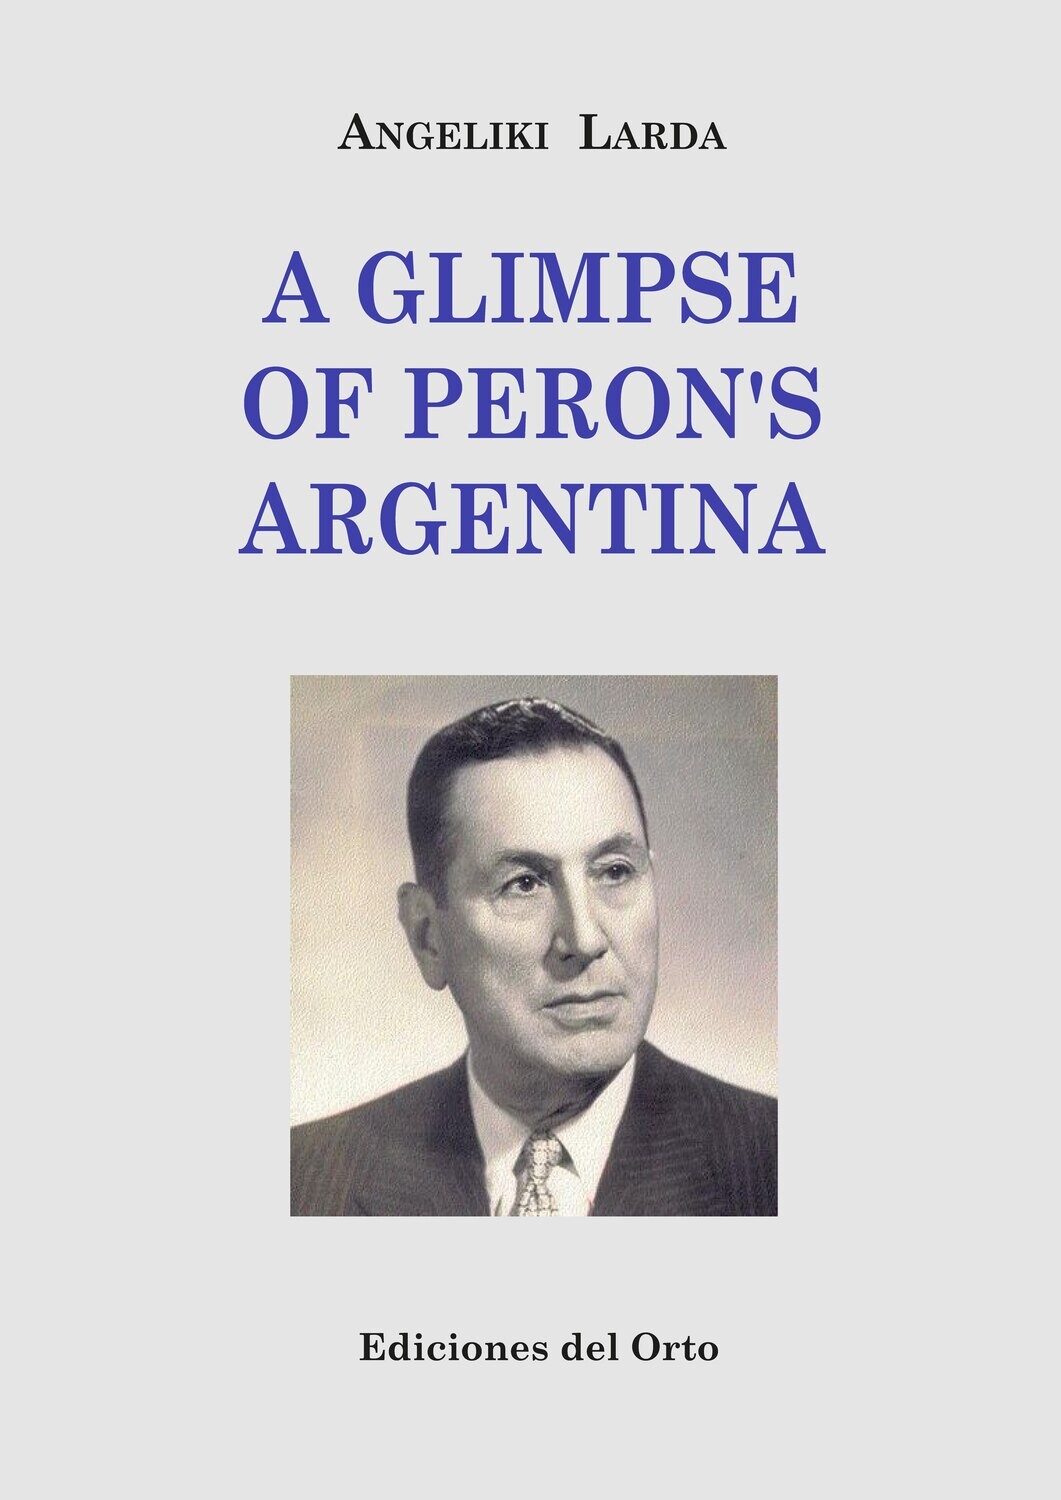 A GLIMPSE OF PERON'S ARGENTINA